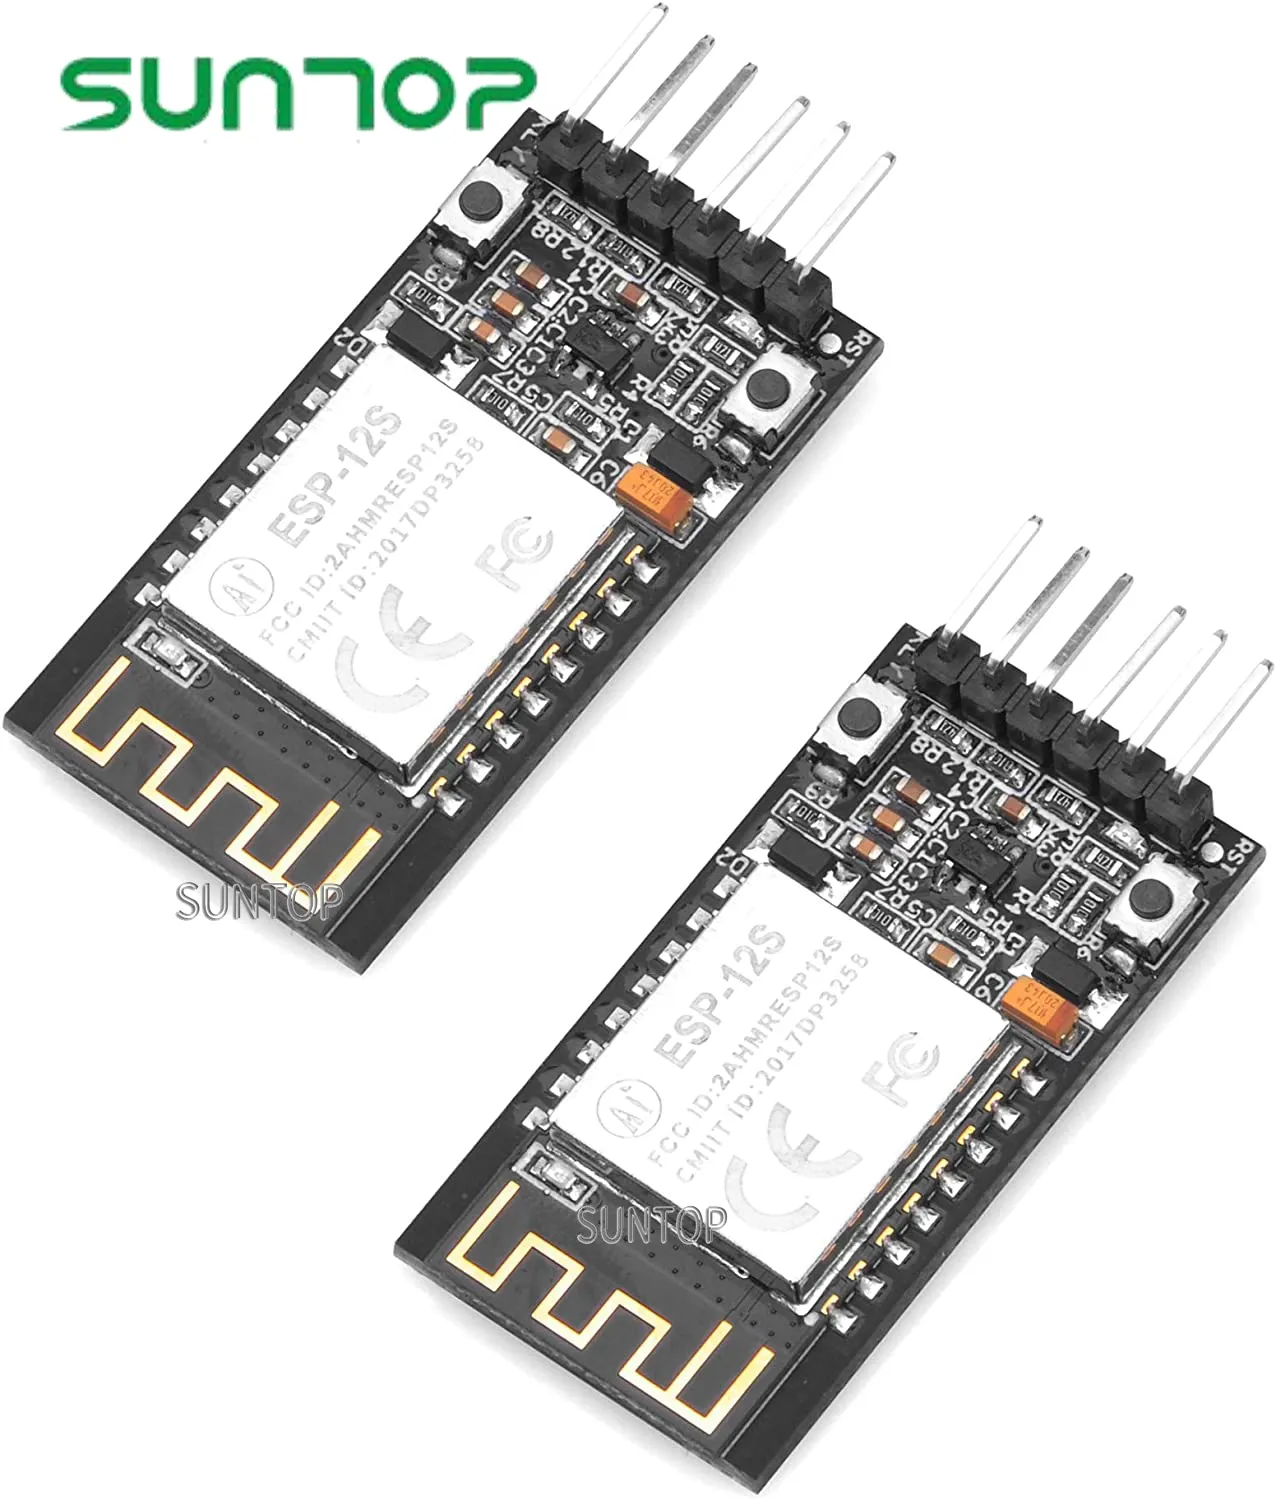 ESP8266 WiFi Module, ESP-12S WiFi Serial Module Board, Wireless Transceiver Remote Port Network Development Board for Arduino